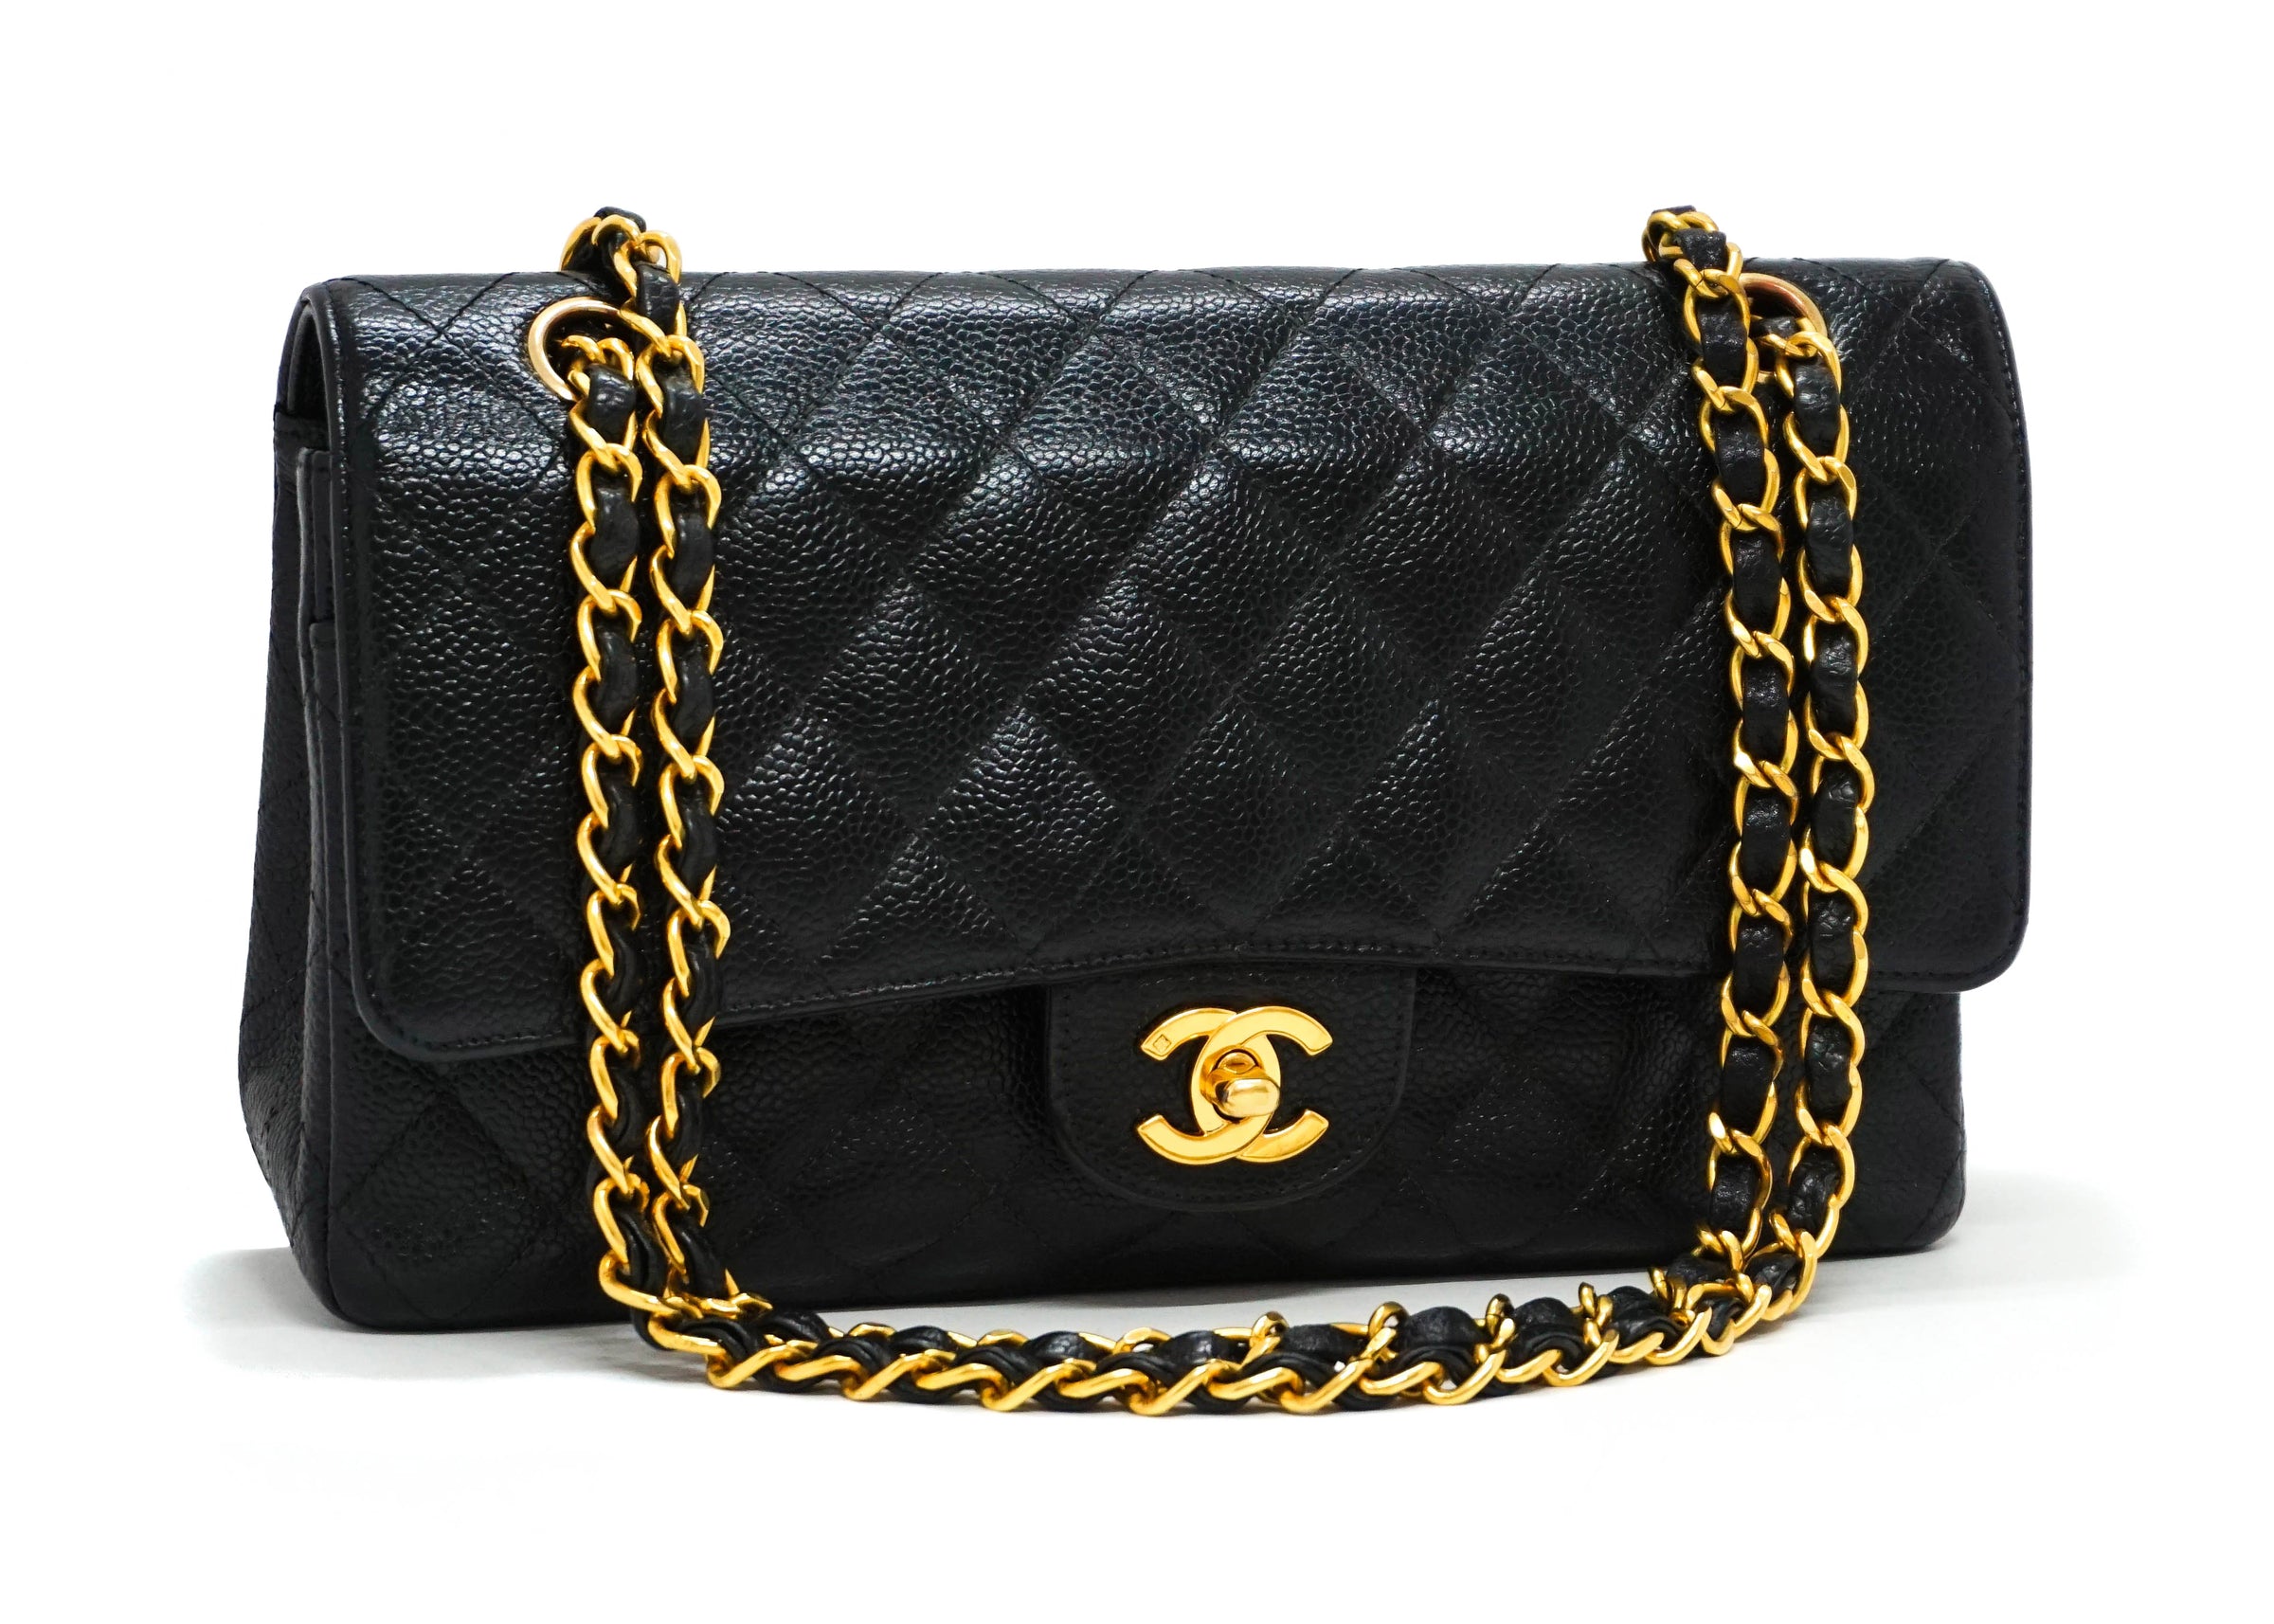 Chanel Classic Handbag Sizes | semashow.com